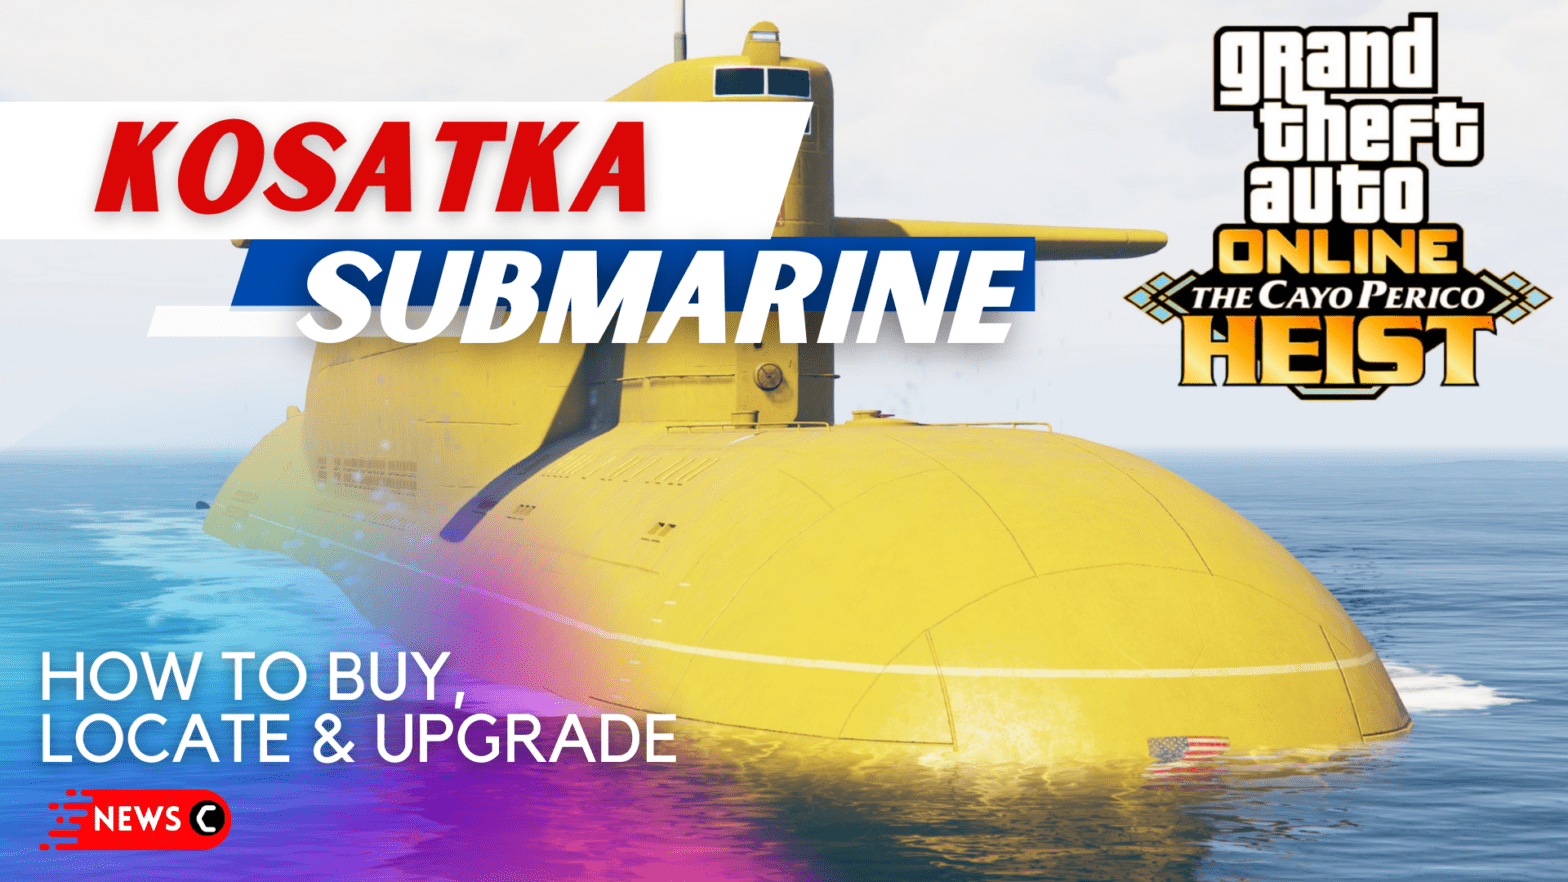 How To Buy The Kosatka Submarine In GTA online